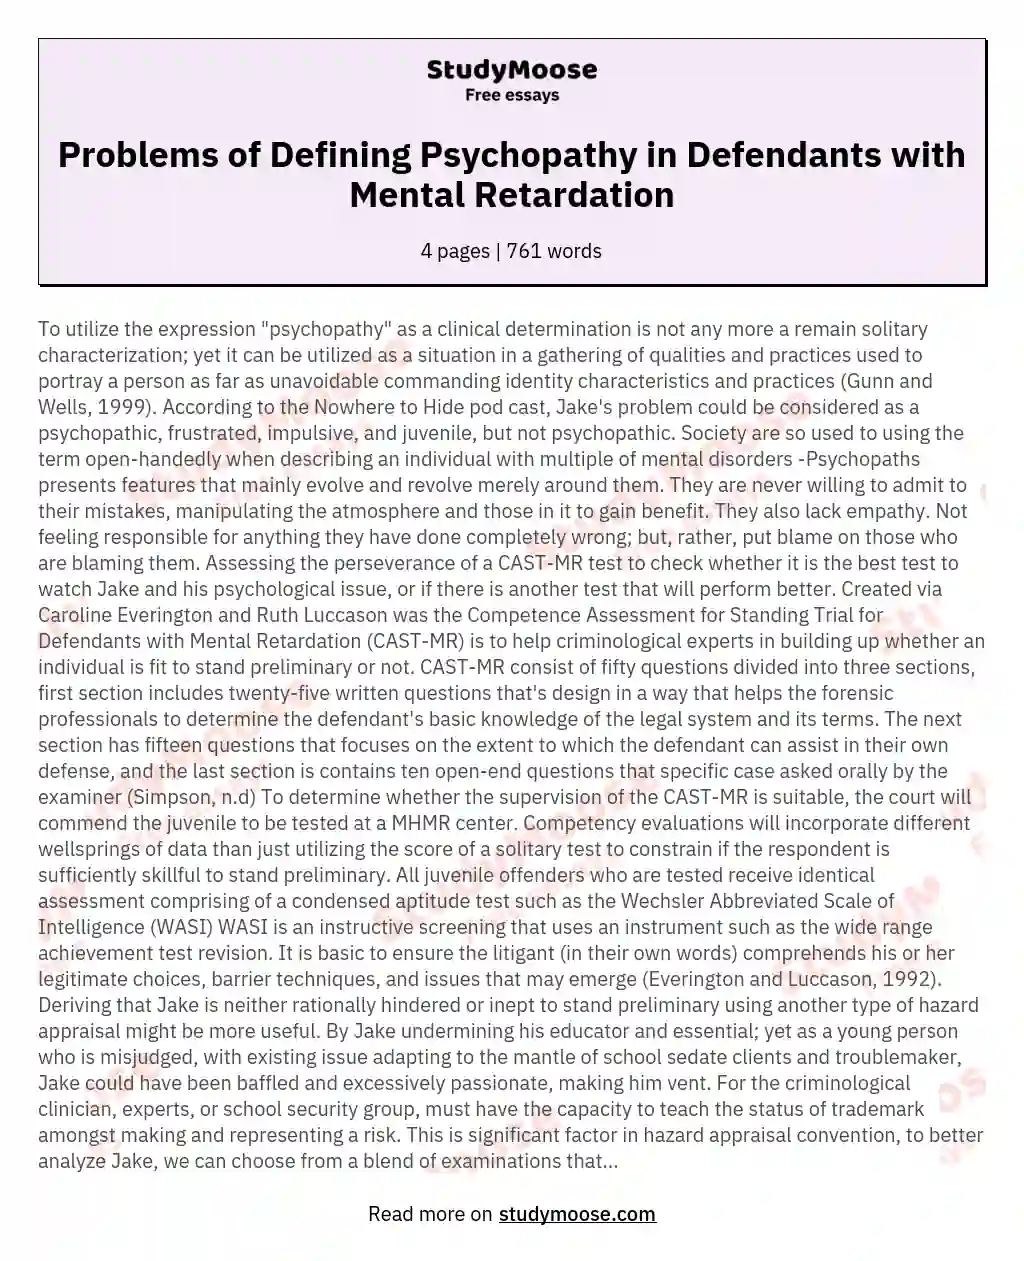 Problems of Defining Psychopathy in Defendants with Mental Retardation essay